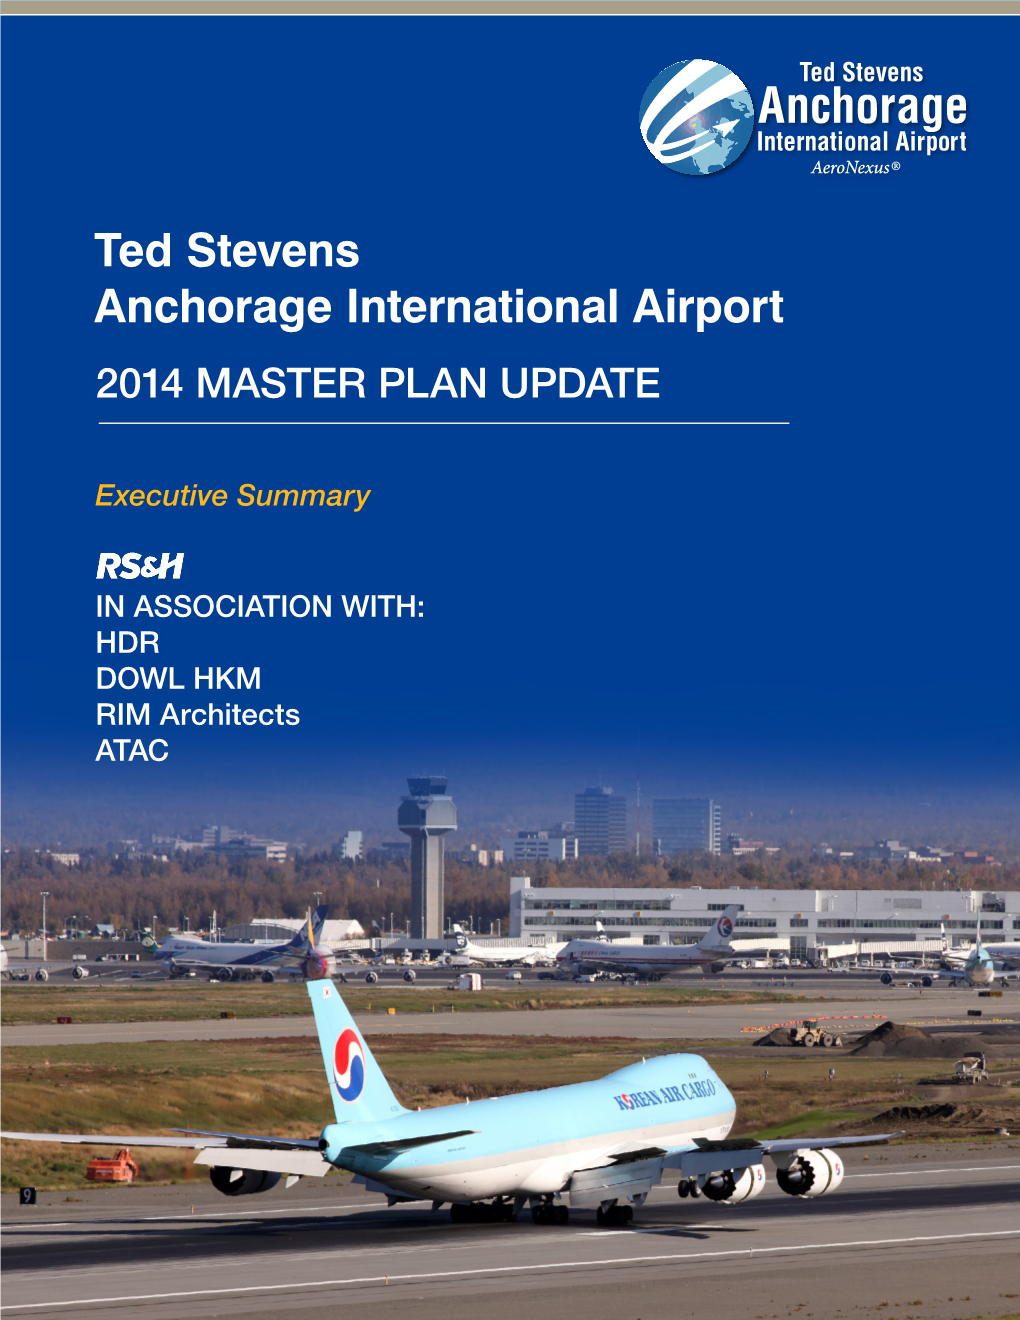 Ted Stevens Anchorage International Airport 2014 MASTER PLAN UPDATE